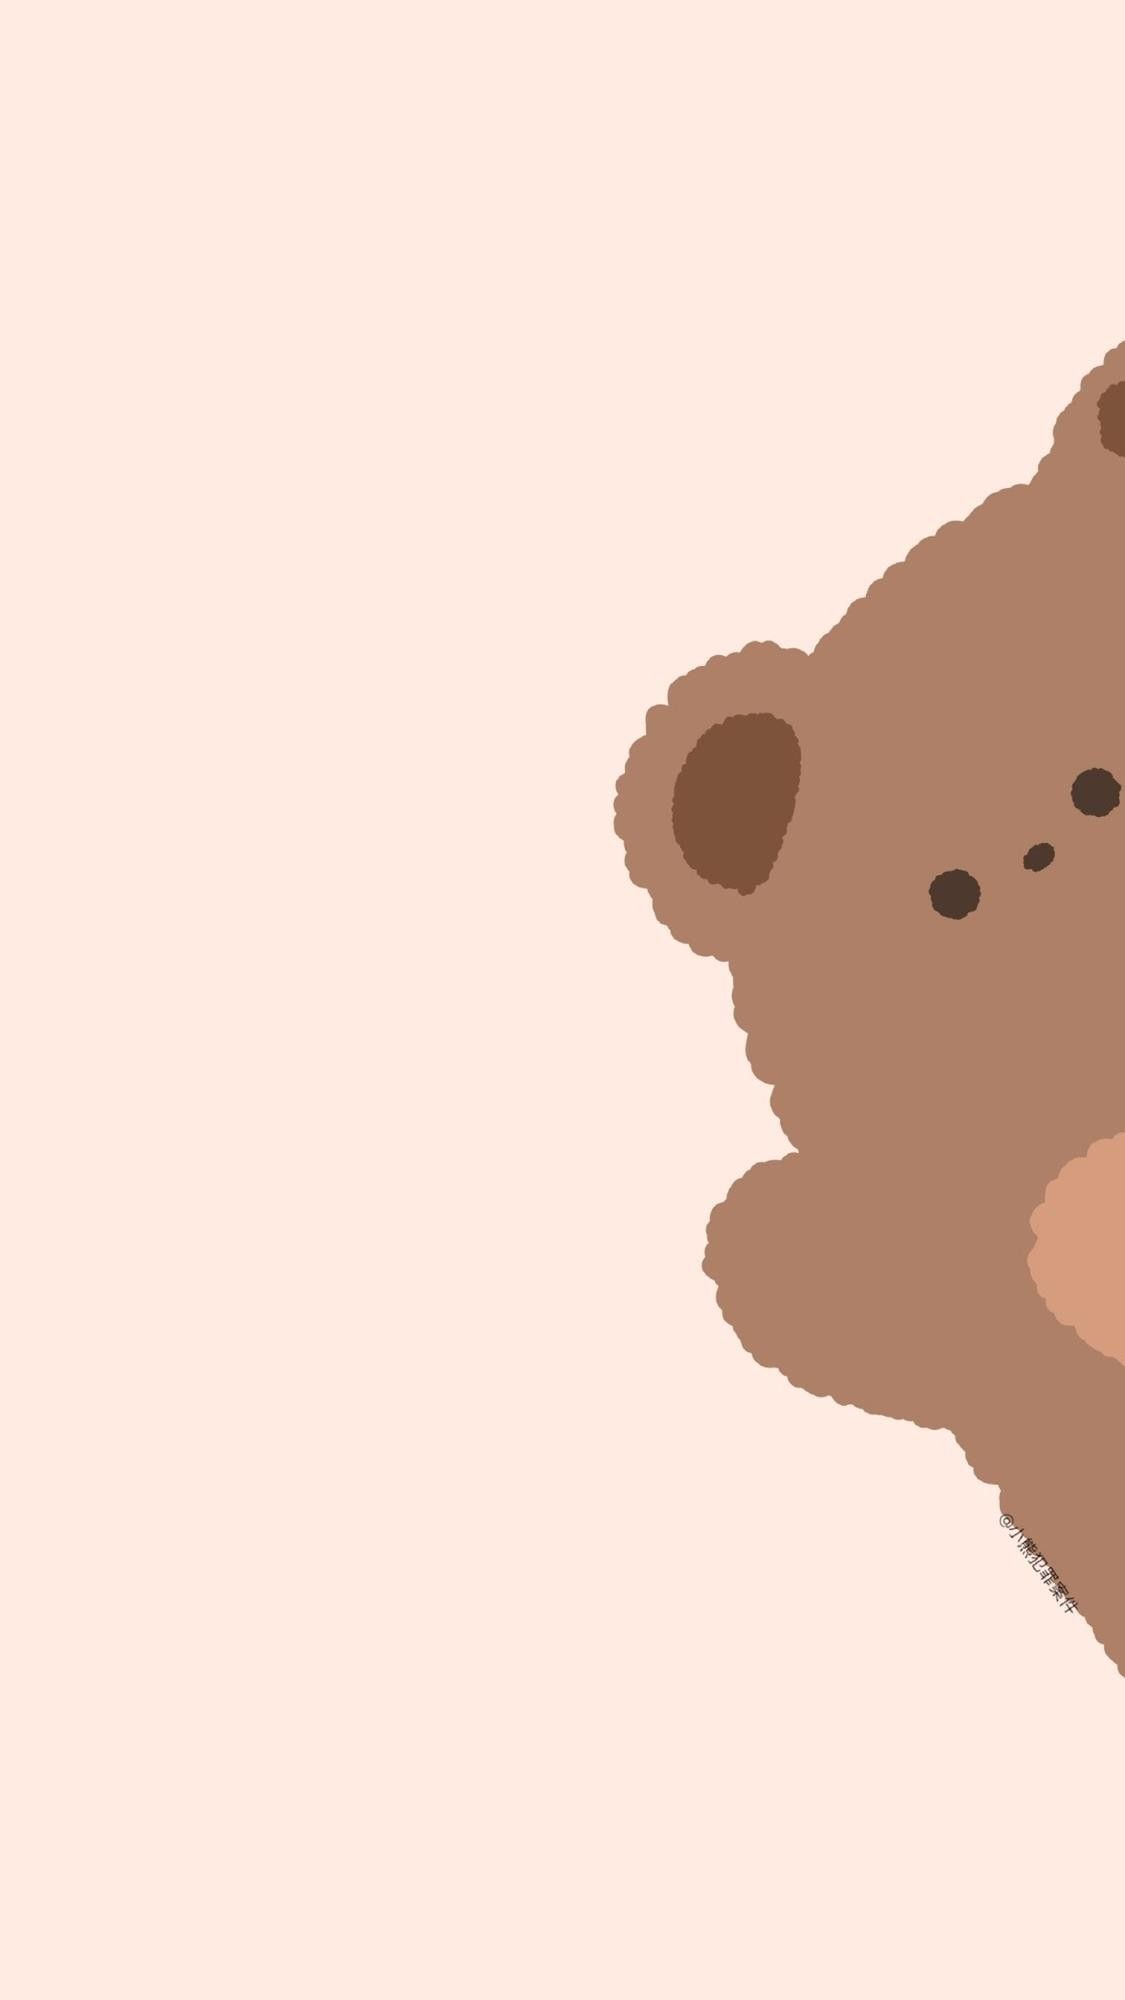 Download 99 Kumpulan Wallpaper Aesthetic Teddy Bear Terbaru Hd